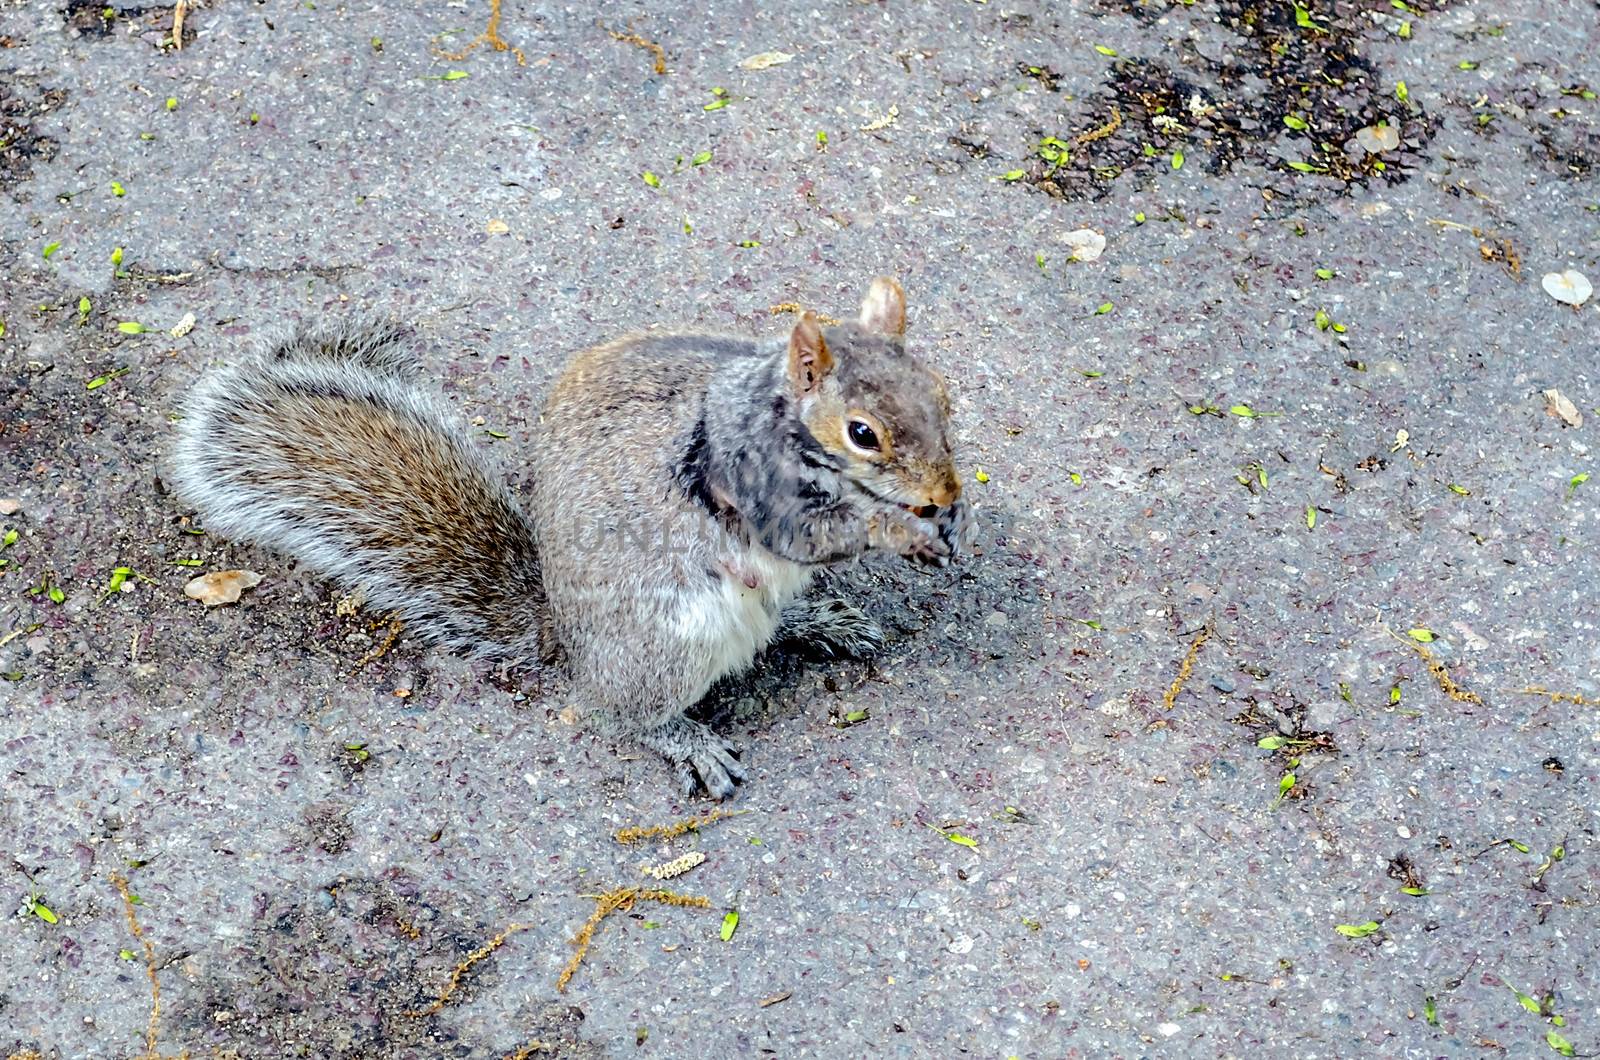 Squirrel eating an acorn by marcorubino